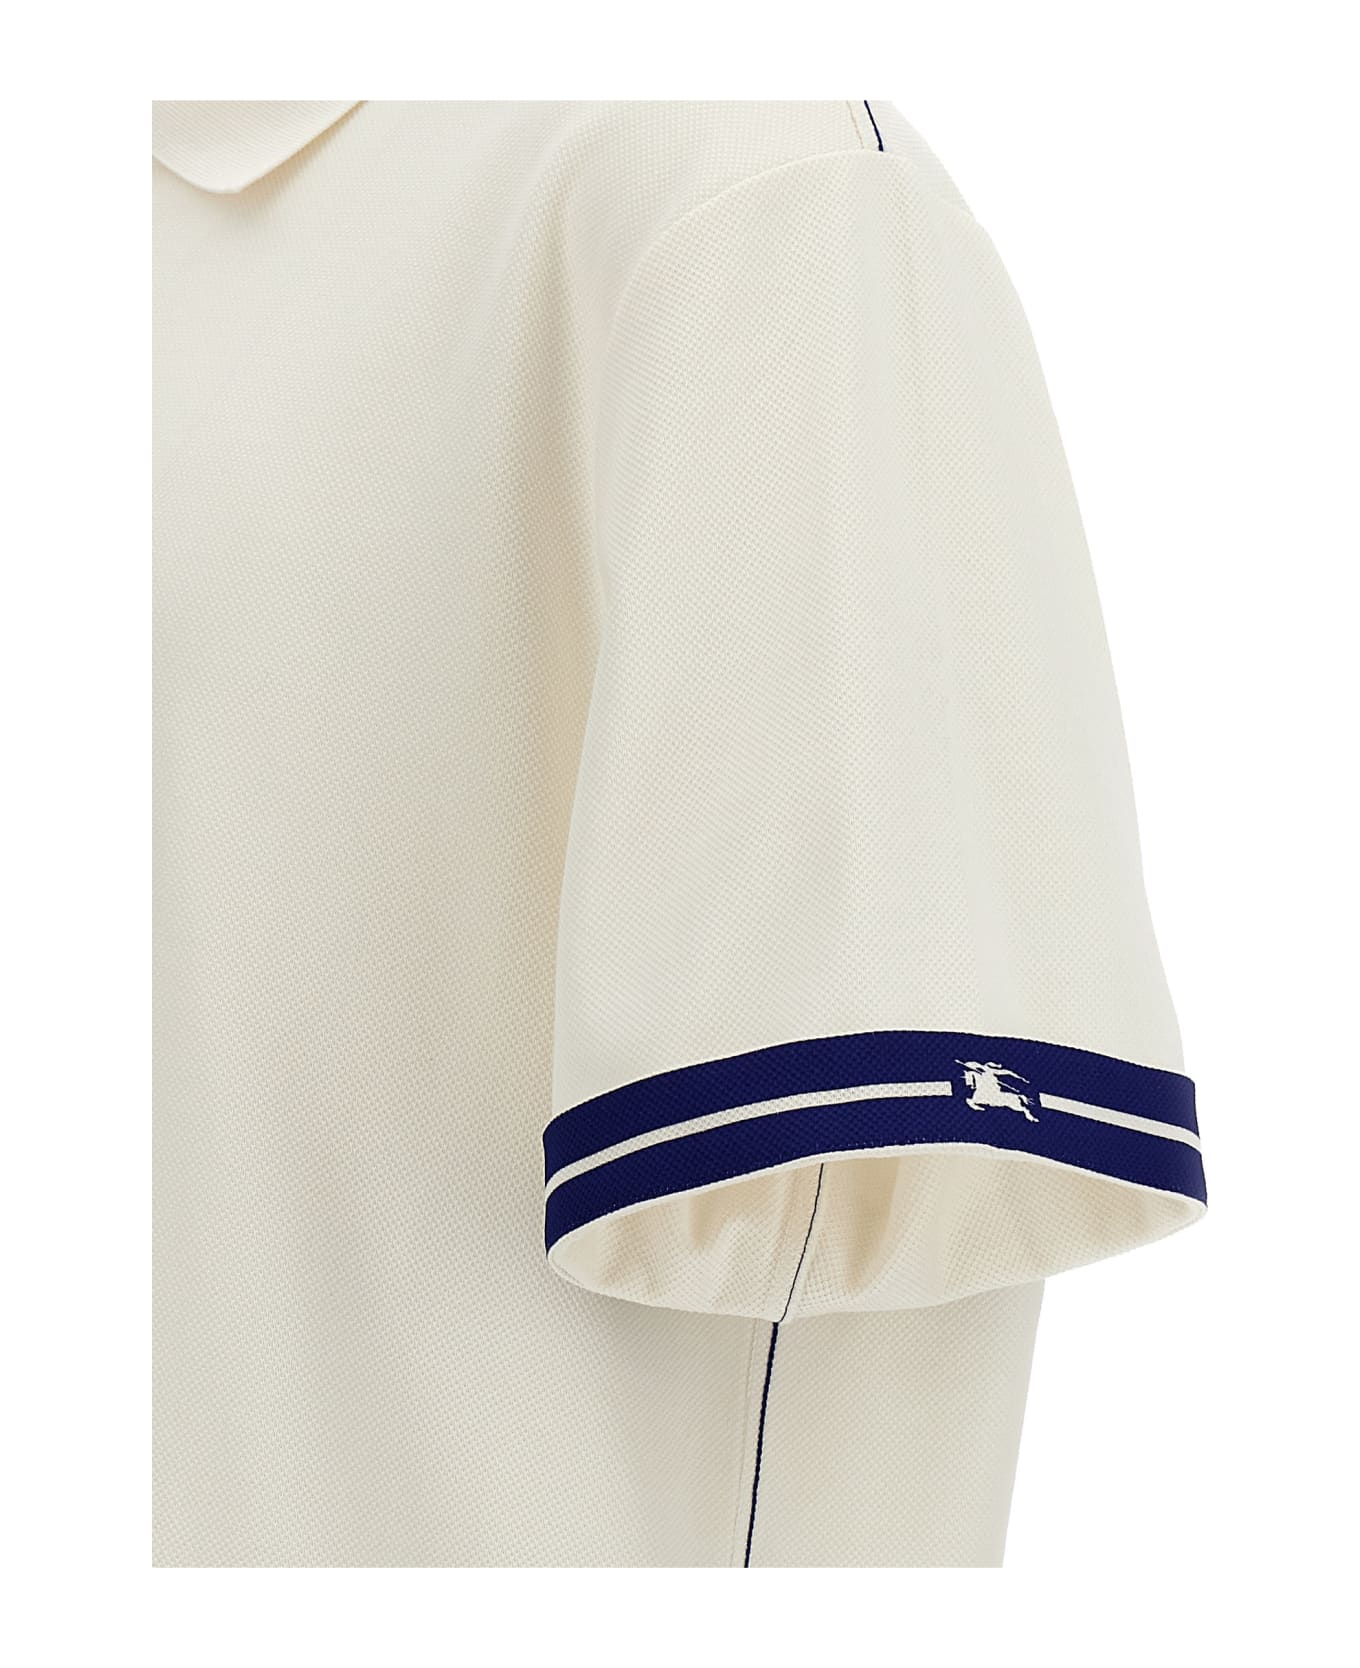 Burberry 'ekd' Polo Shirt - White ポロシャツ